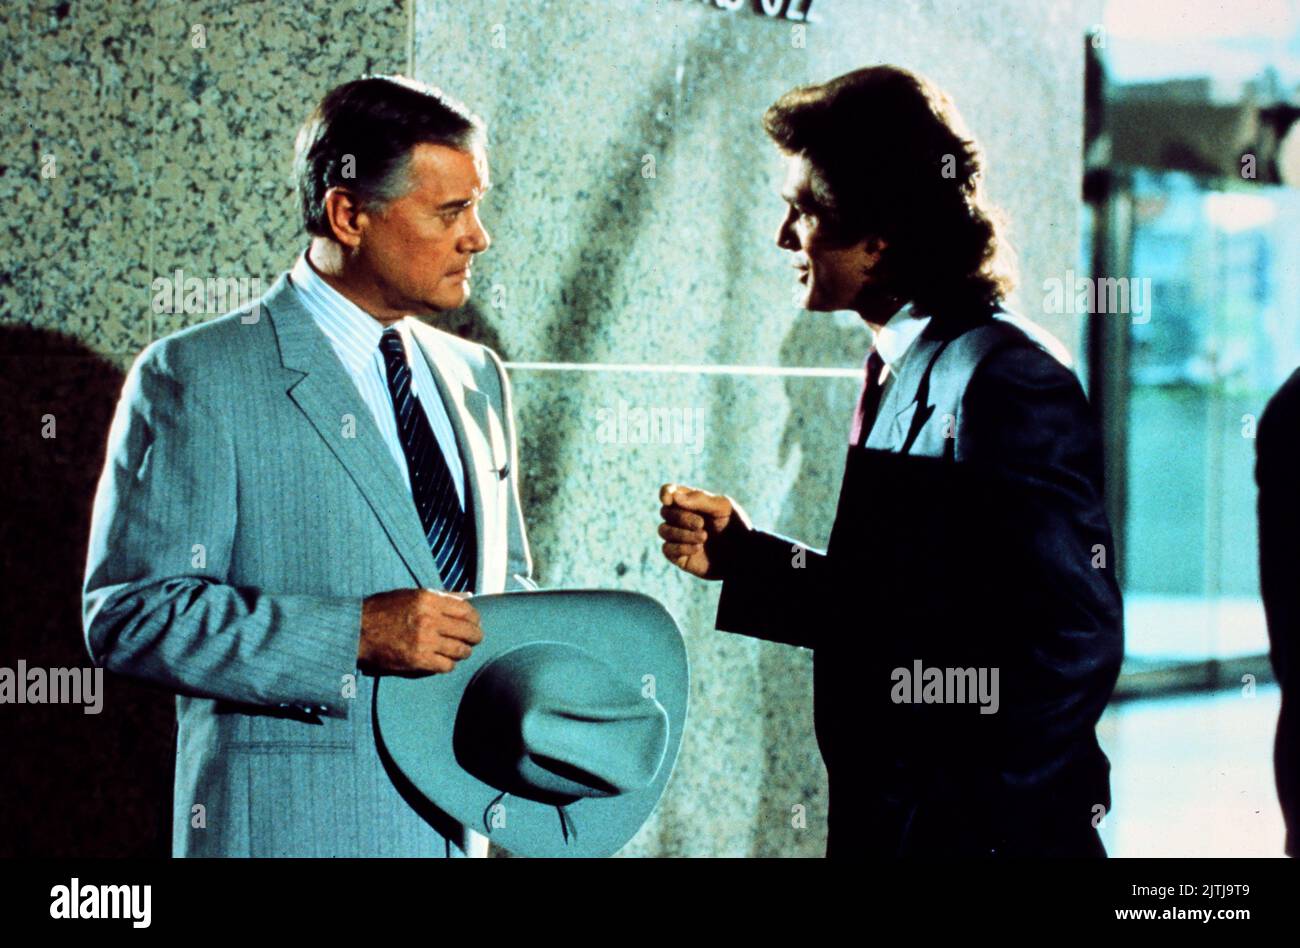 Dallas, Fernsehserie, EE.UU. 1978 - 1991, Darsteller: Larry Hagman, Jared Martin Foto de stock